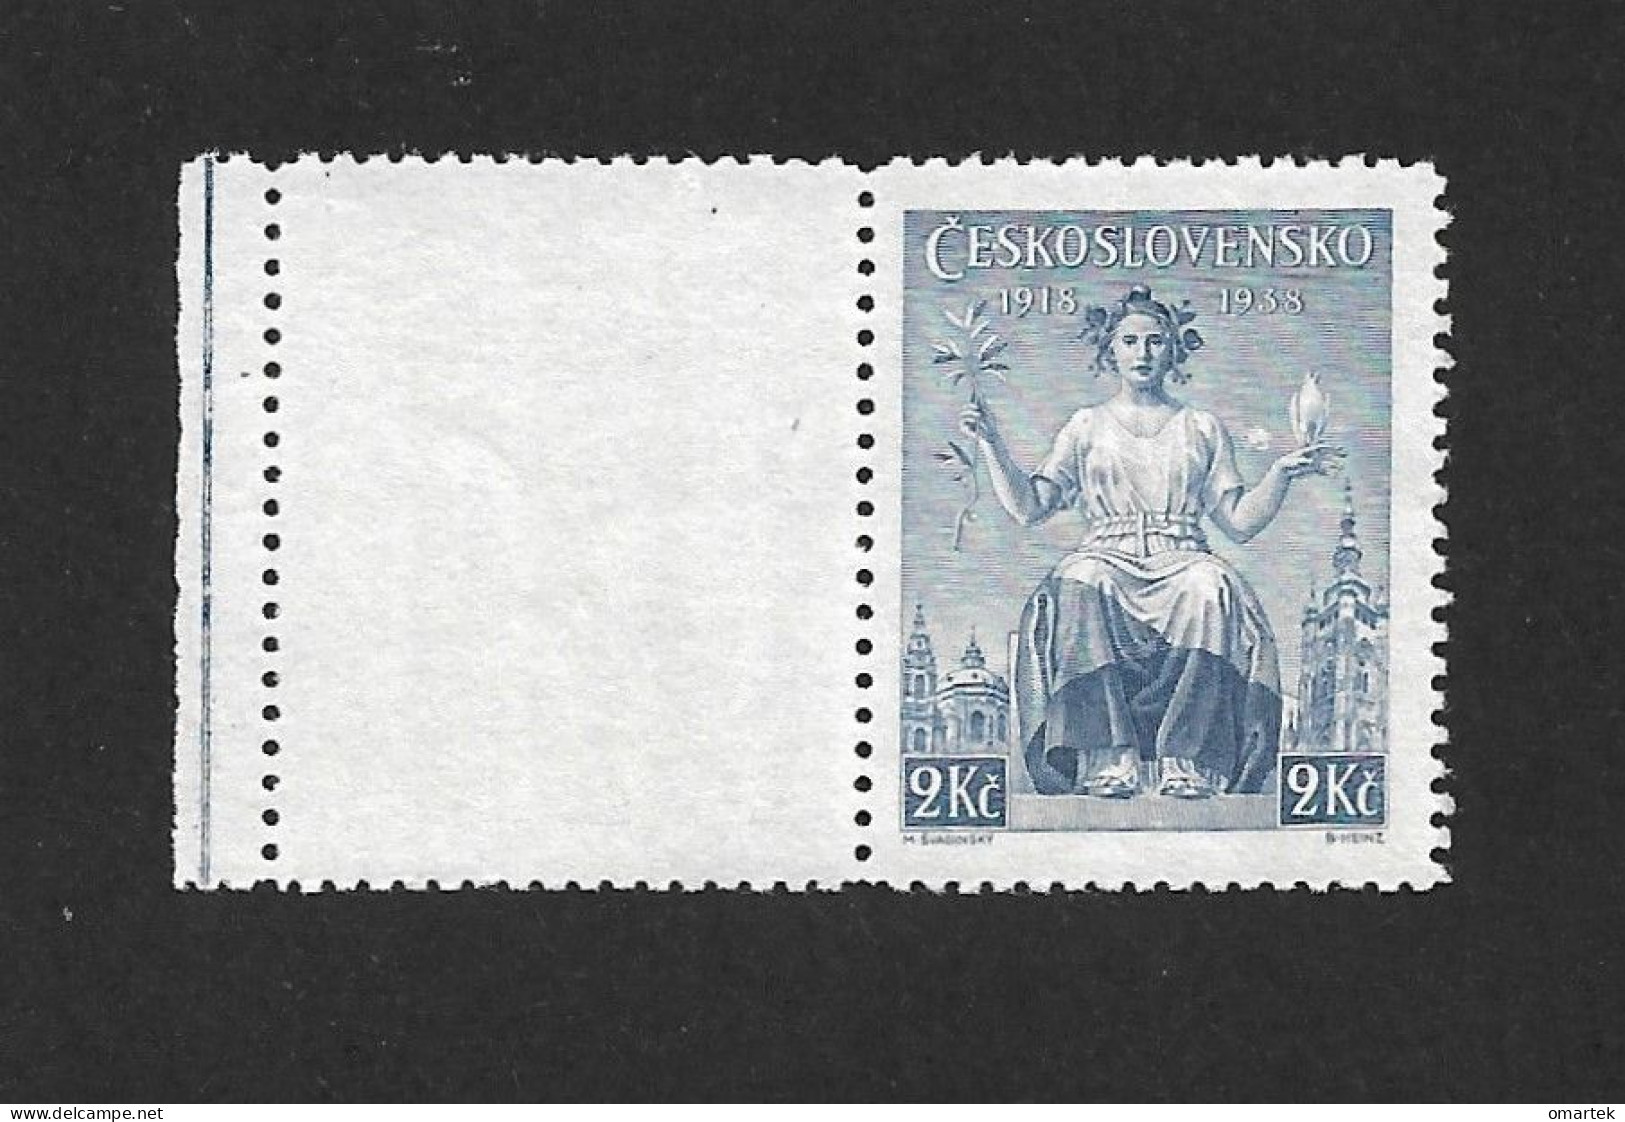 Czechoslovakia 1938 MNH ** Mi 404 Zf L Sc 254 Alegory Of The Republic With Coupon. Tschechoslowakei C1 - Ungebraucht